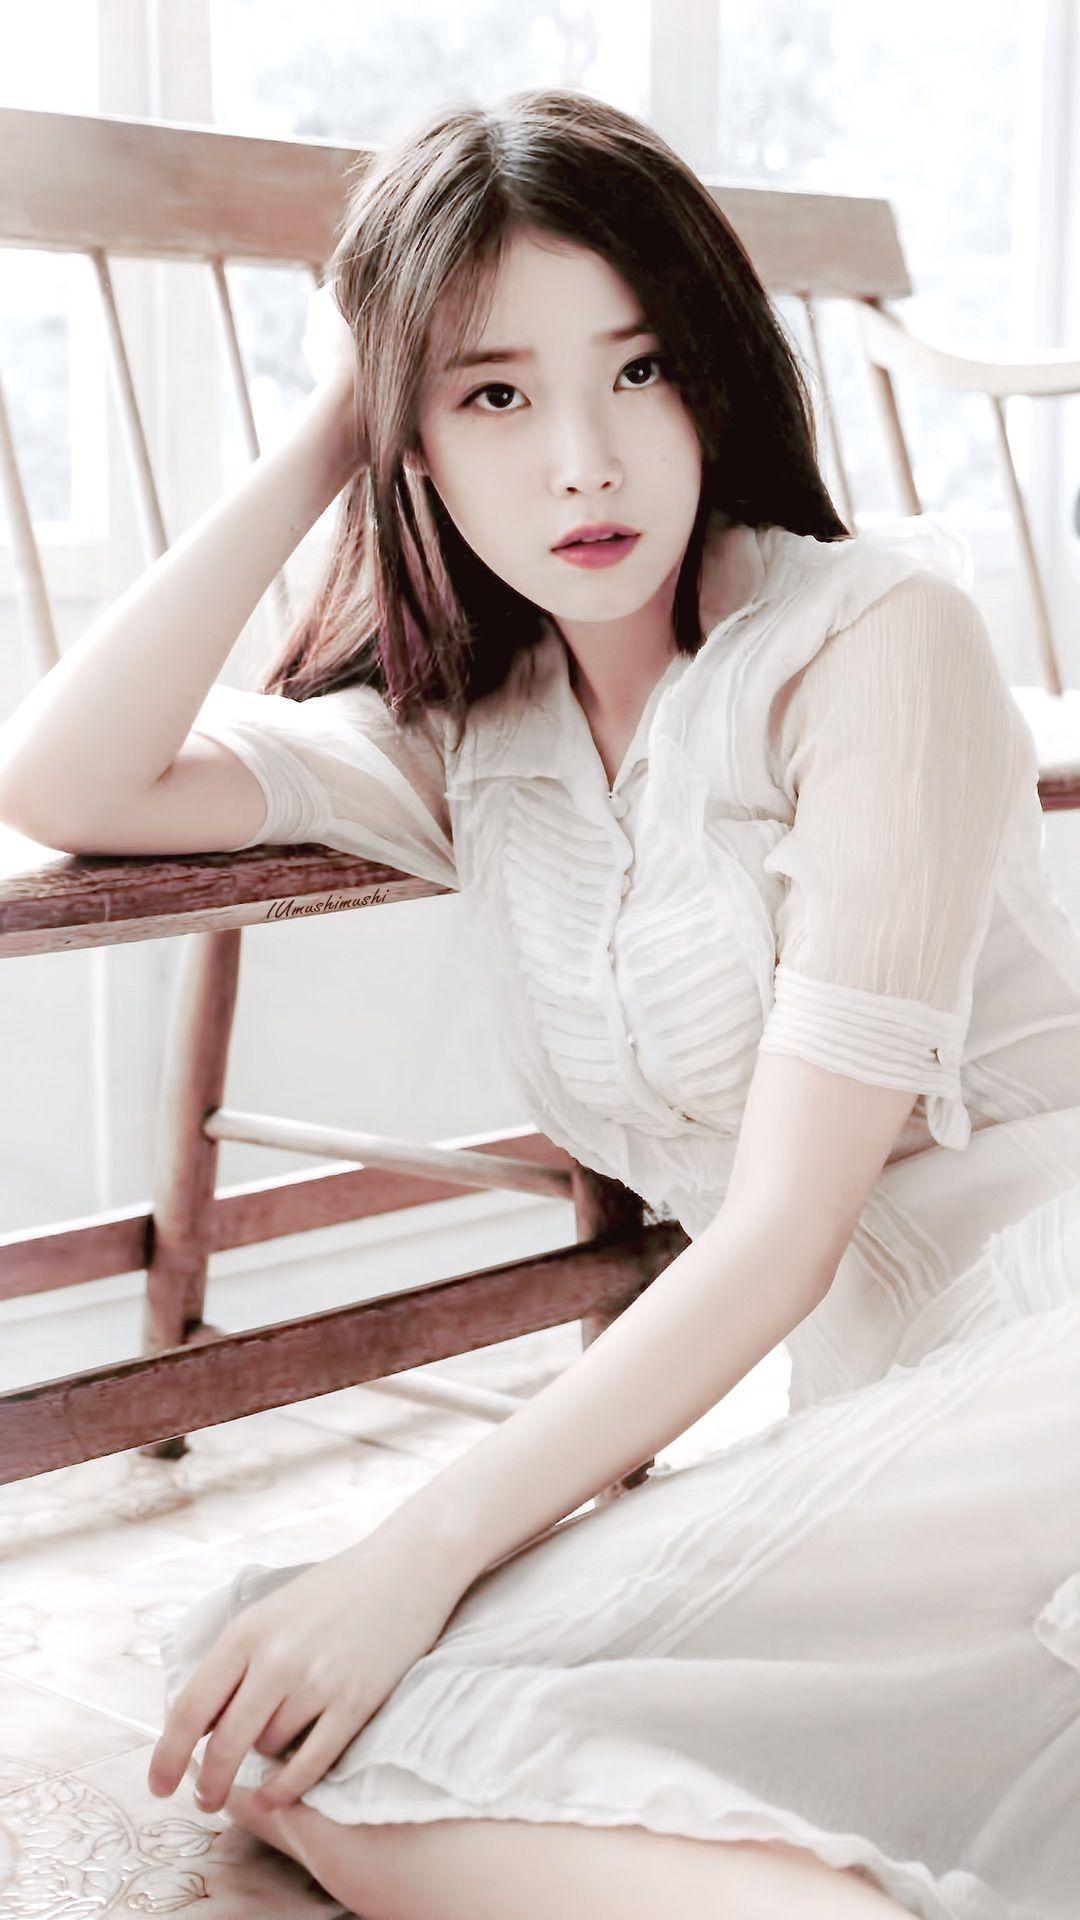 IU Lee Ji Eun Add By Amandine Brenna #IU #KPop #Singer. Like A